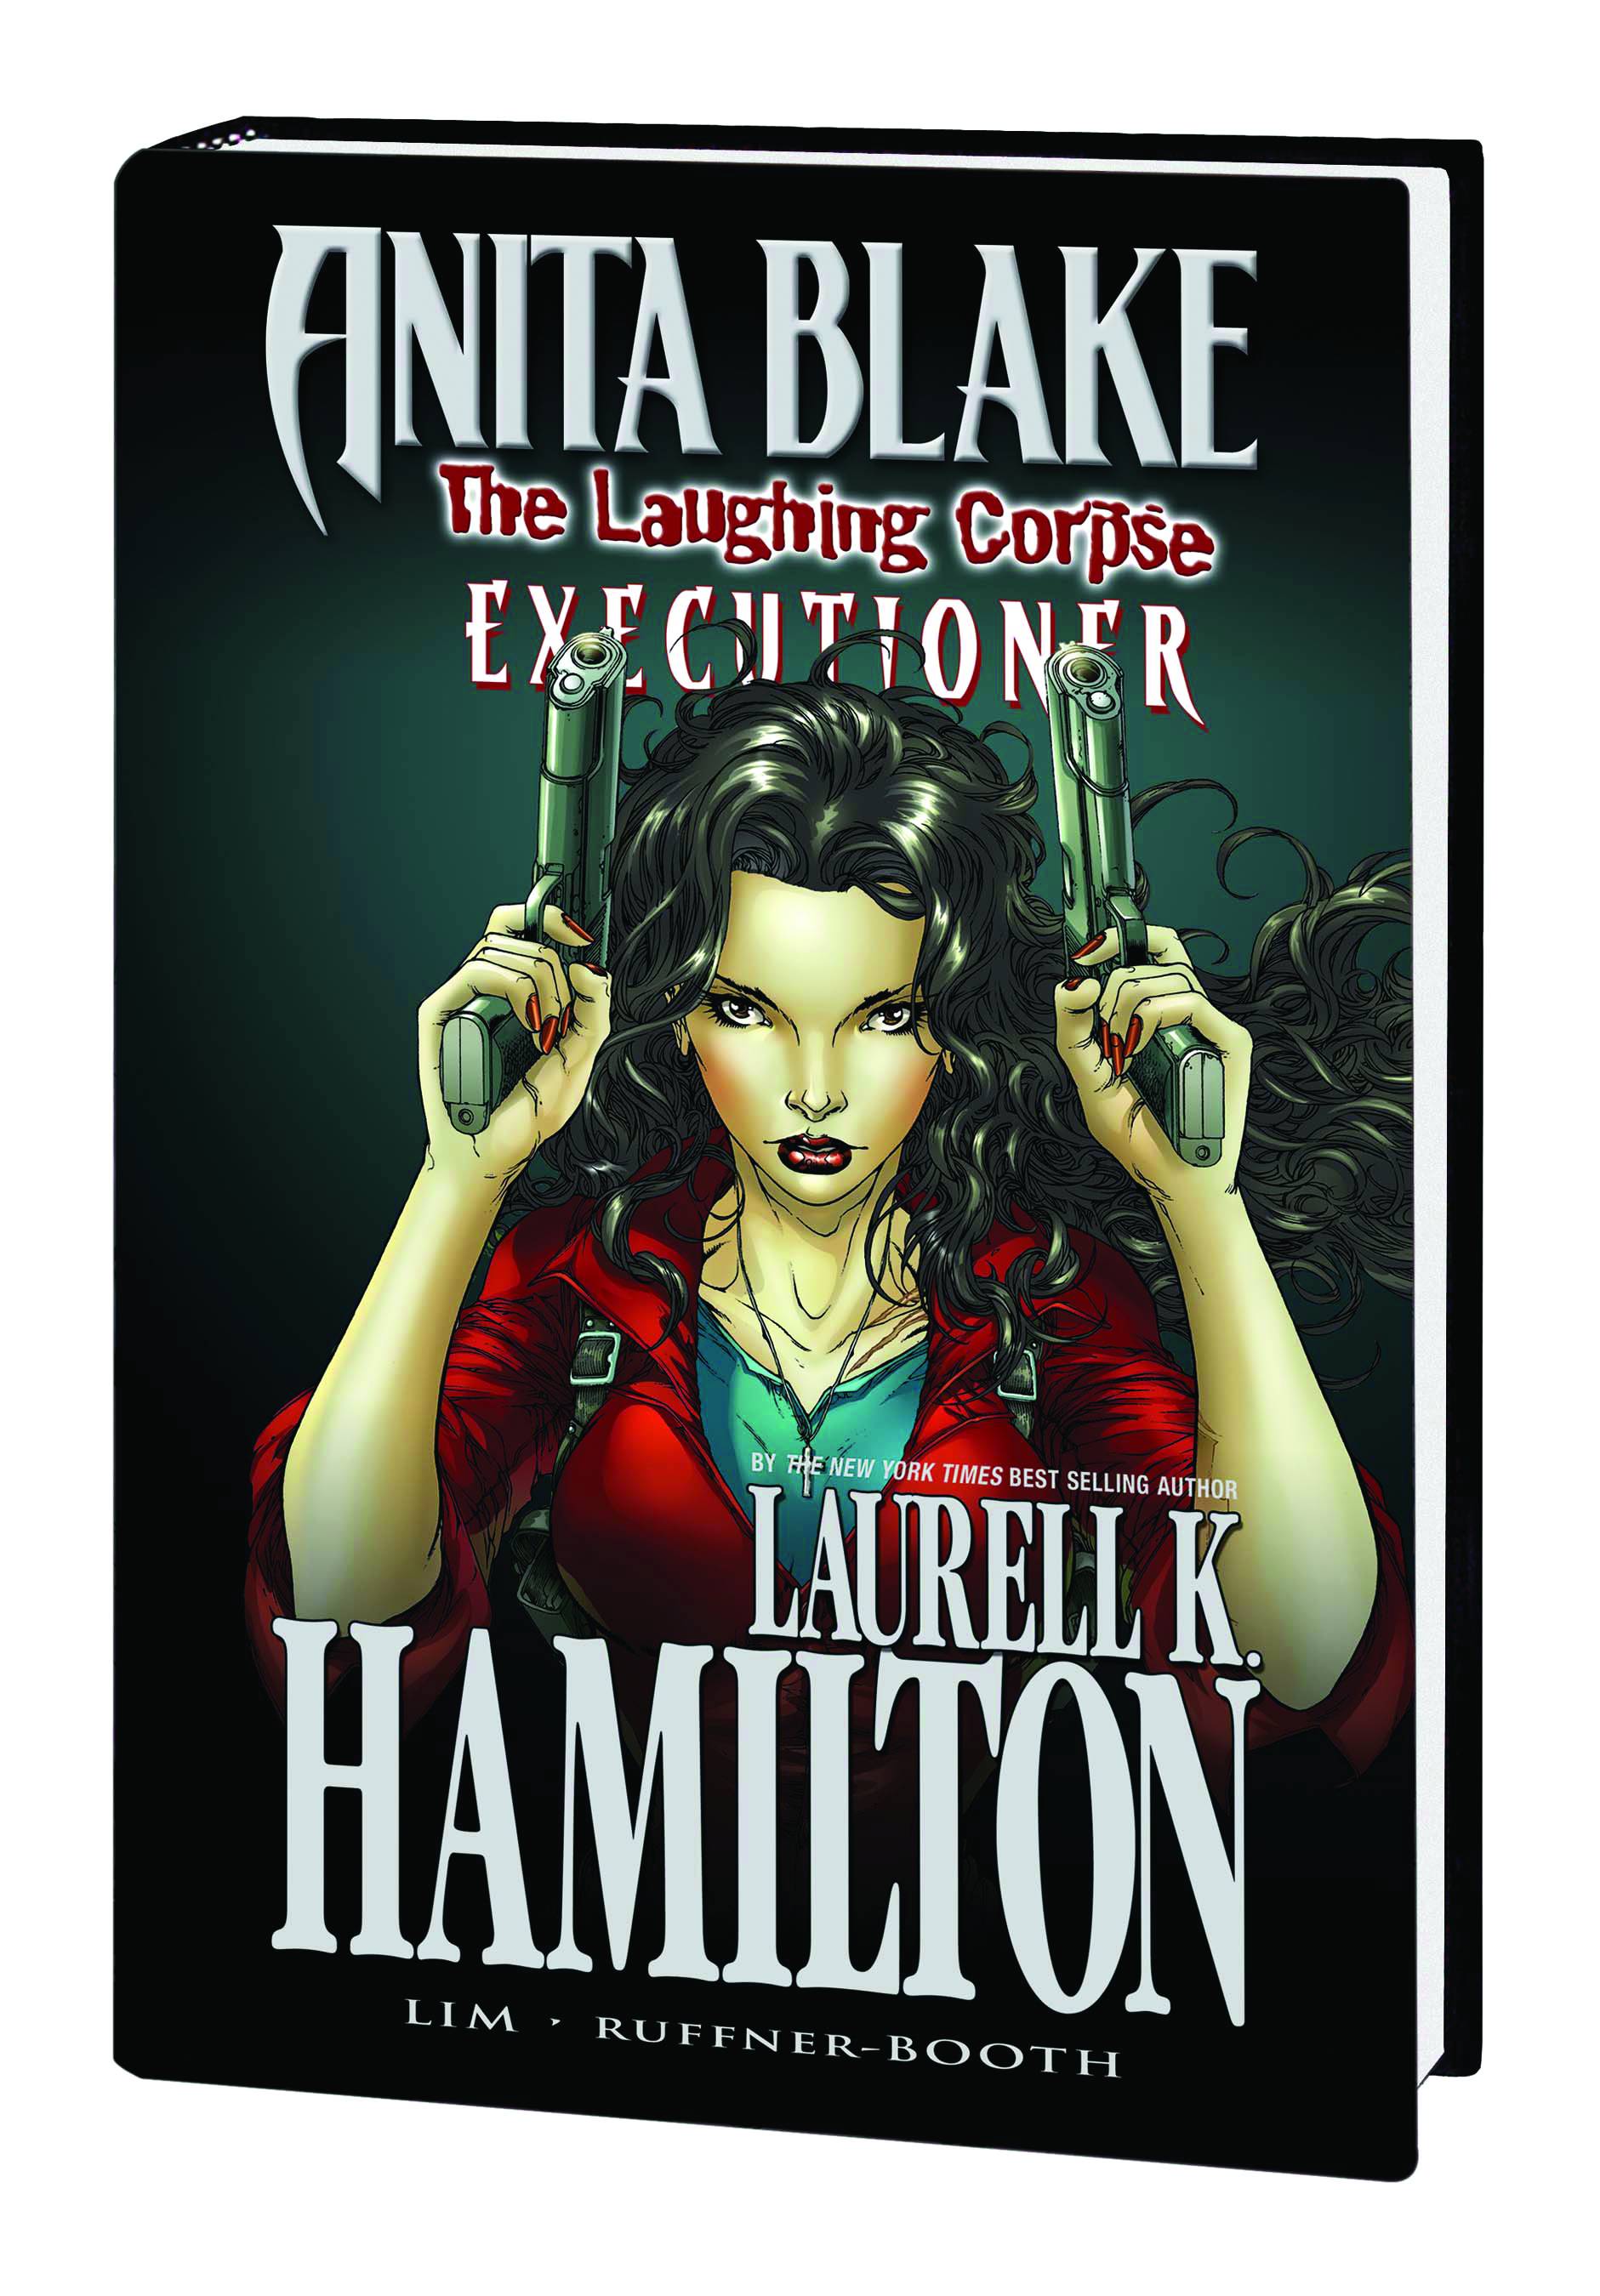 Anita Blake, Vampire Hunter The Laughing Corpse Book 3 - Executioner (Hardcover)